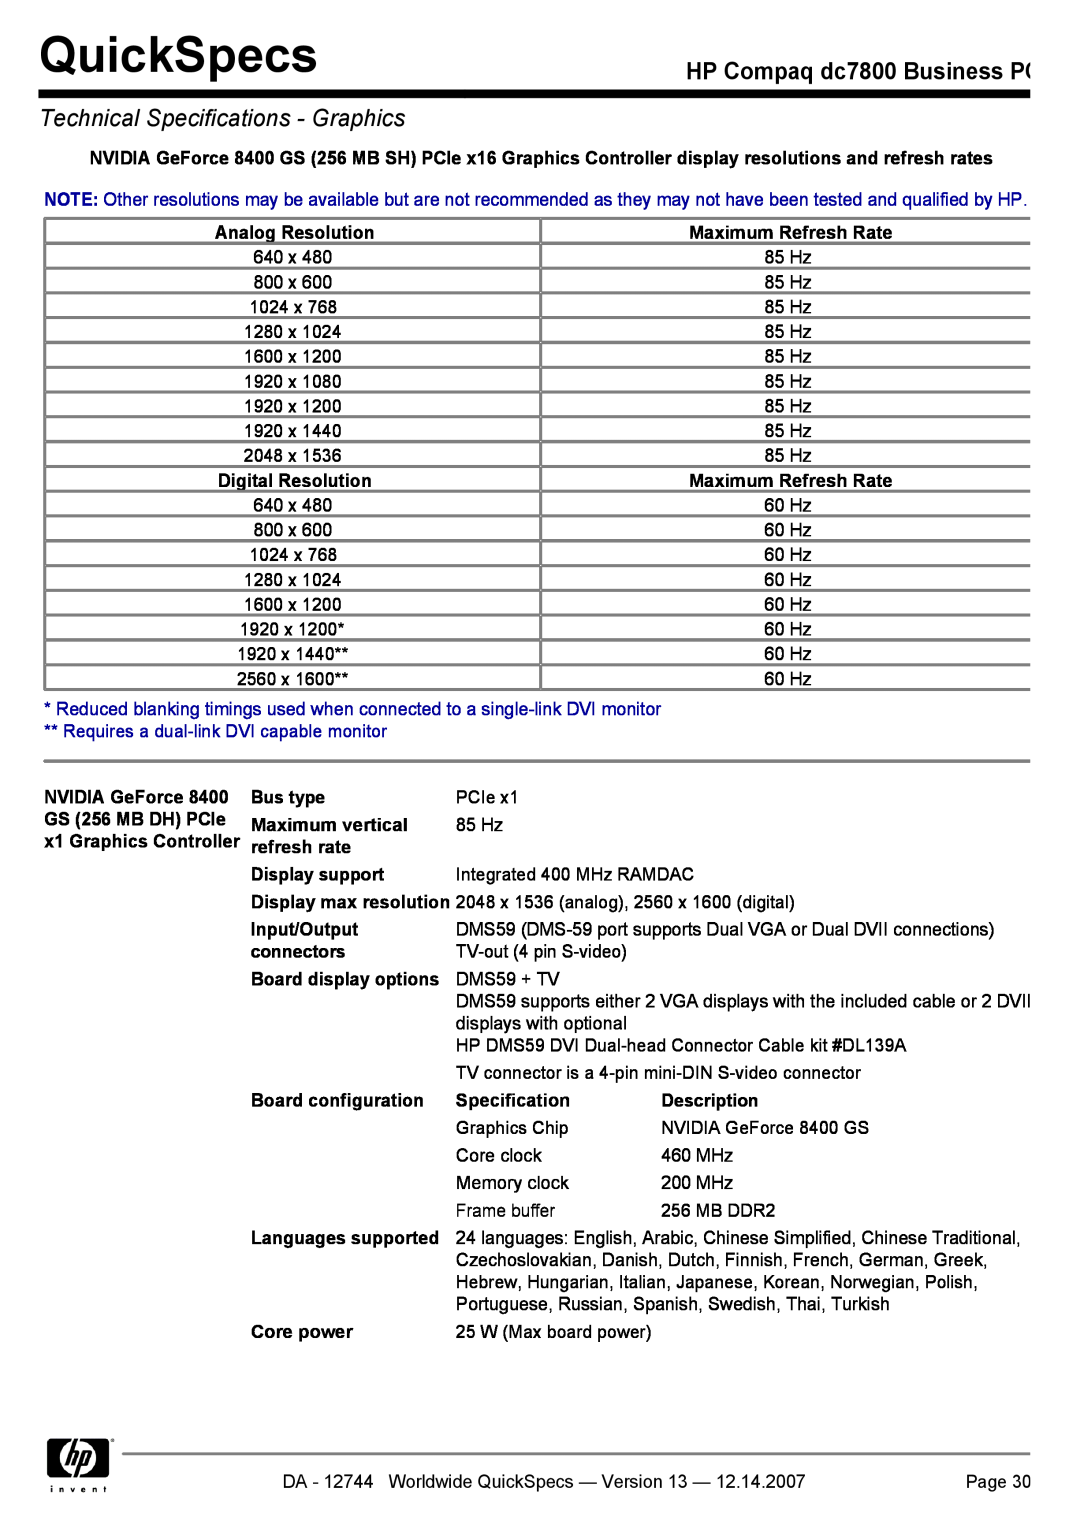 Compaq manual QuickSpecs, HP Compaq dc7800 Business PC, Technical Specifications - Graphics 